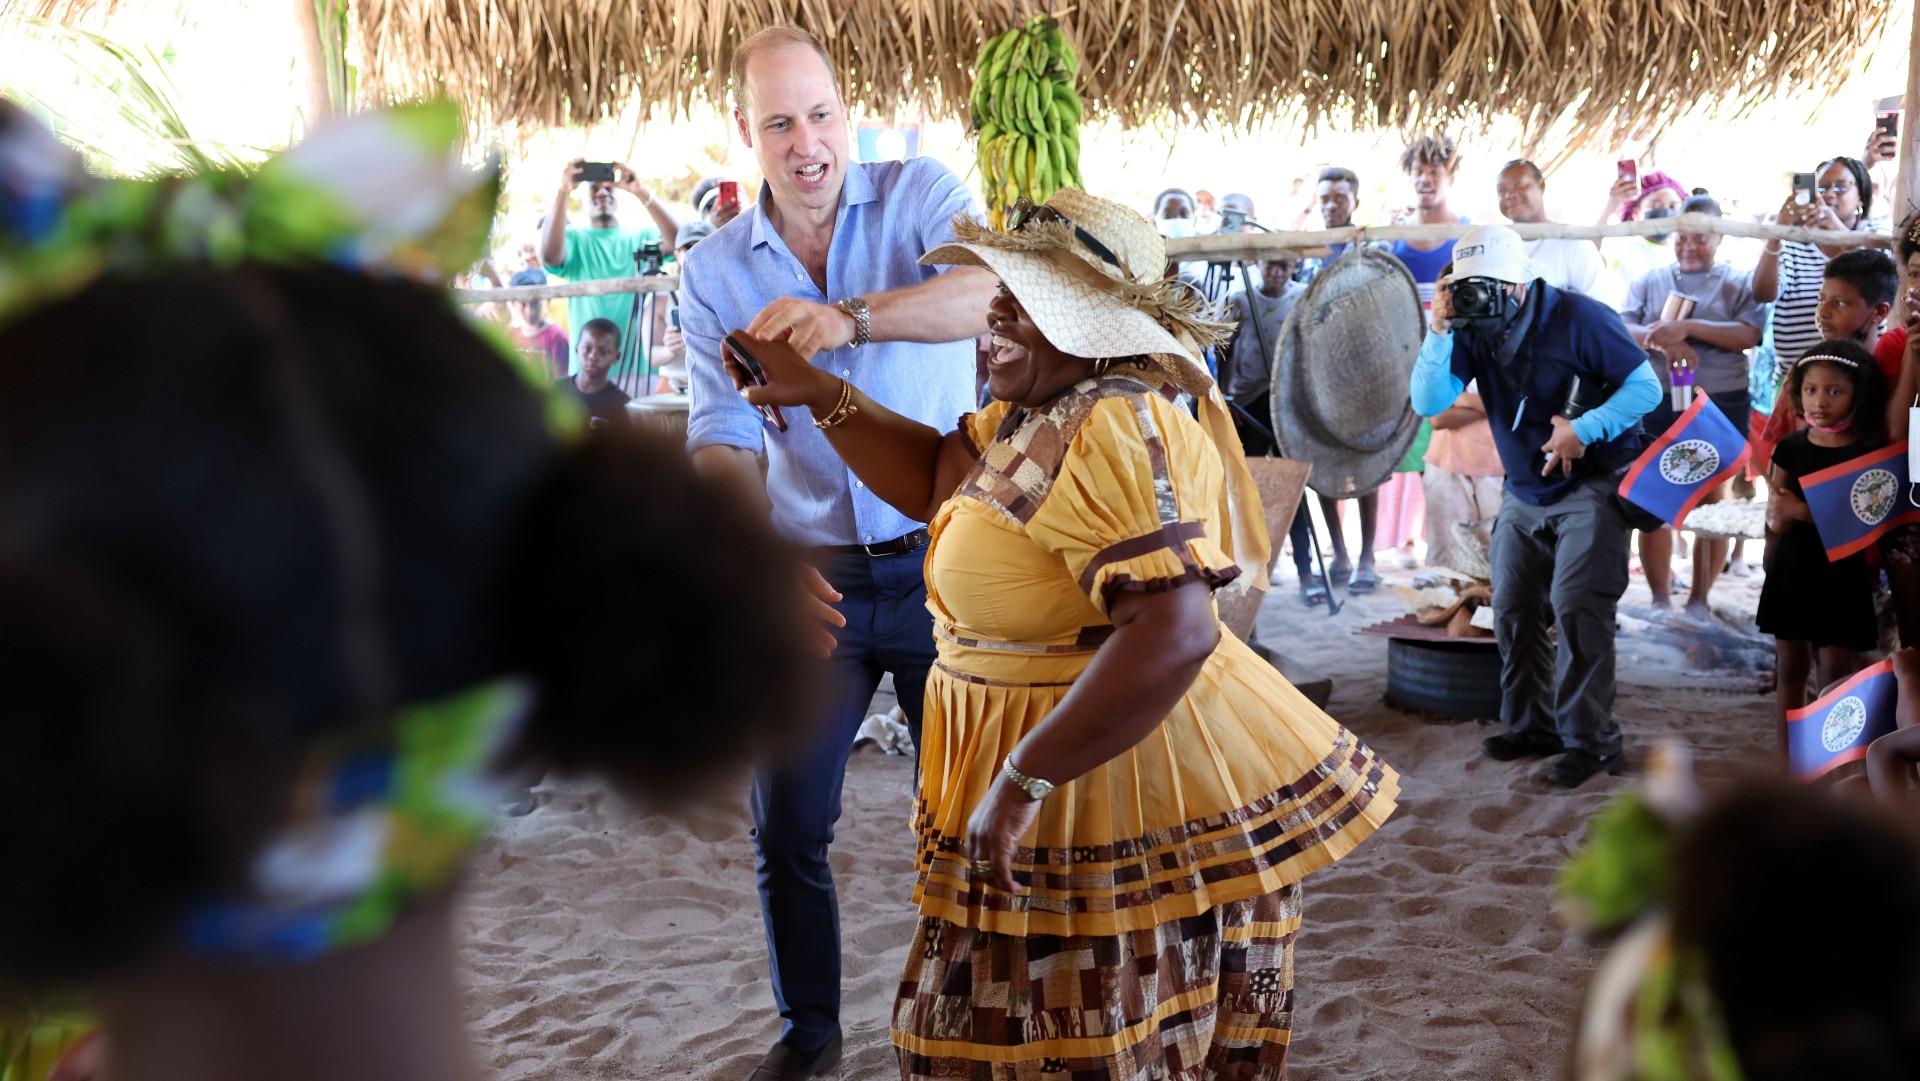 Cambridges dance with locals in Hopkins, Belize